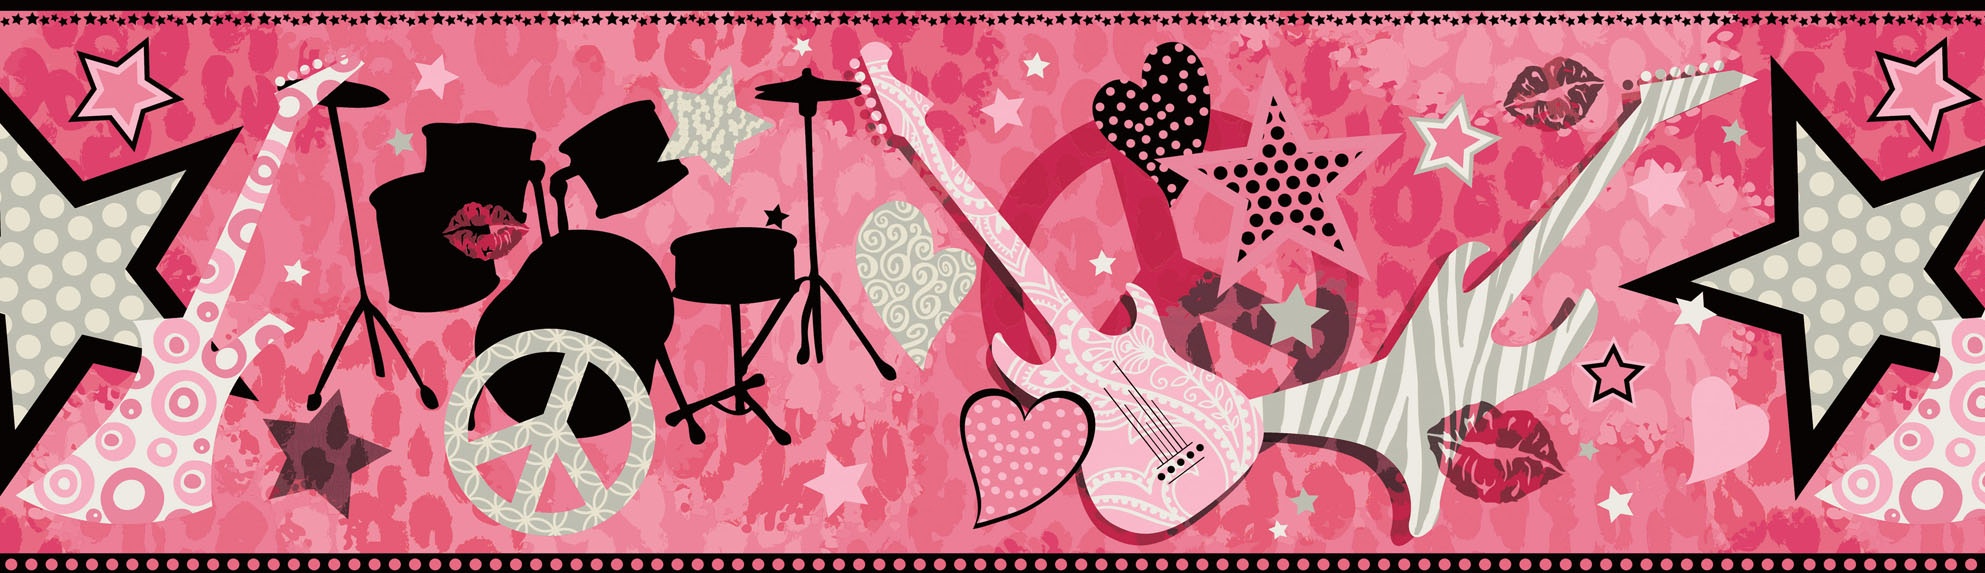 Rock Star Pink Background - HD Wallpaper 